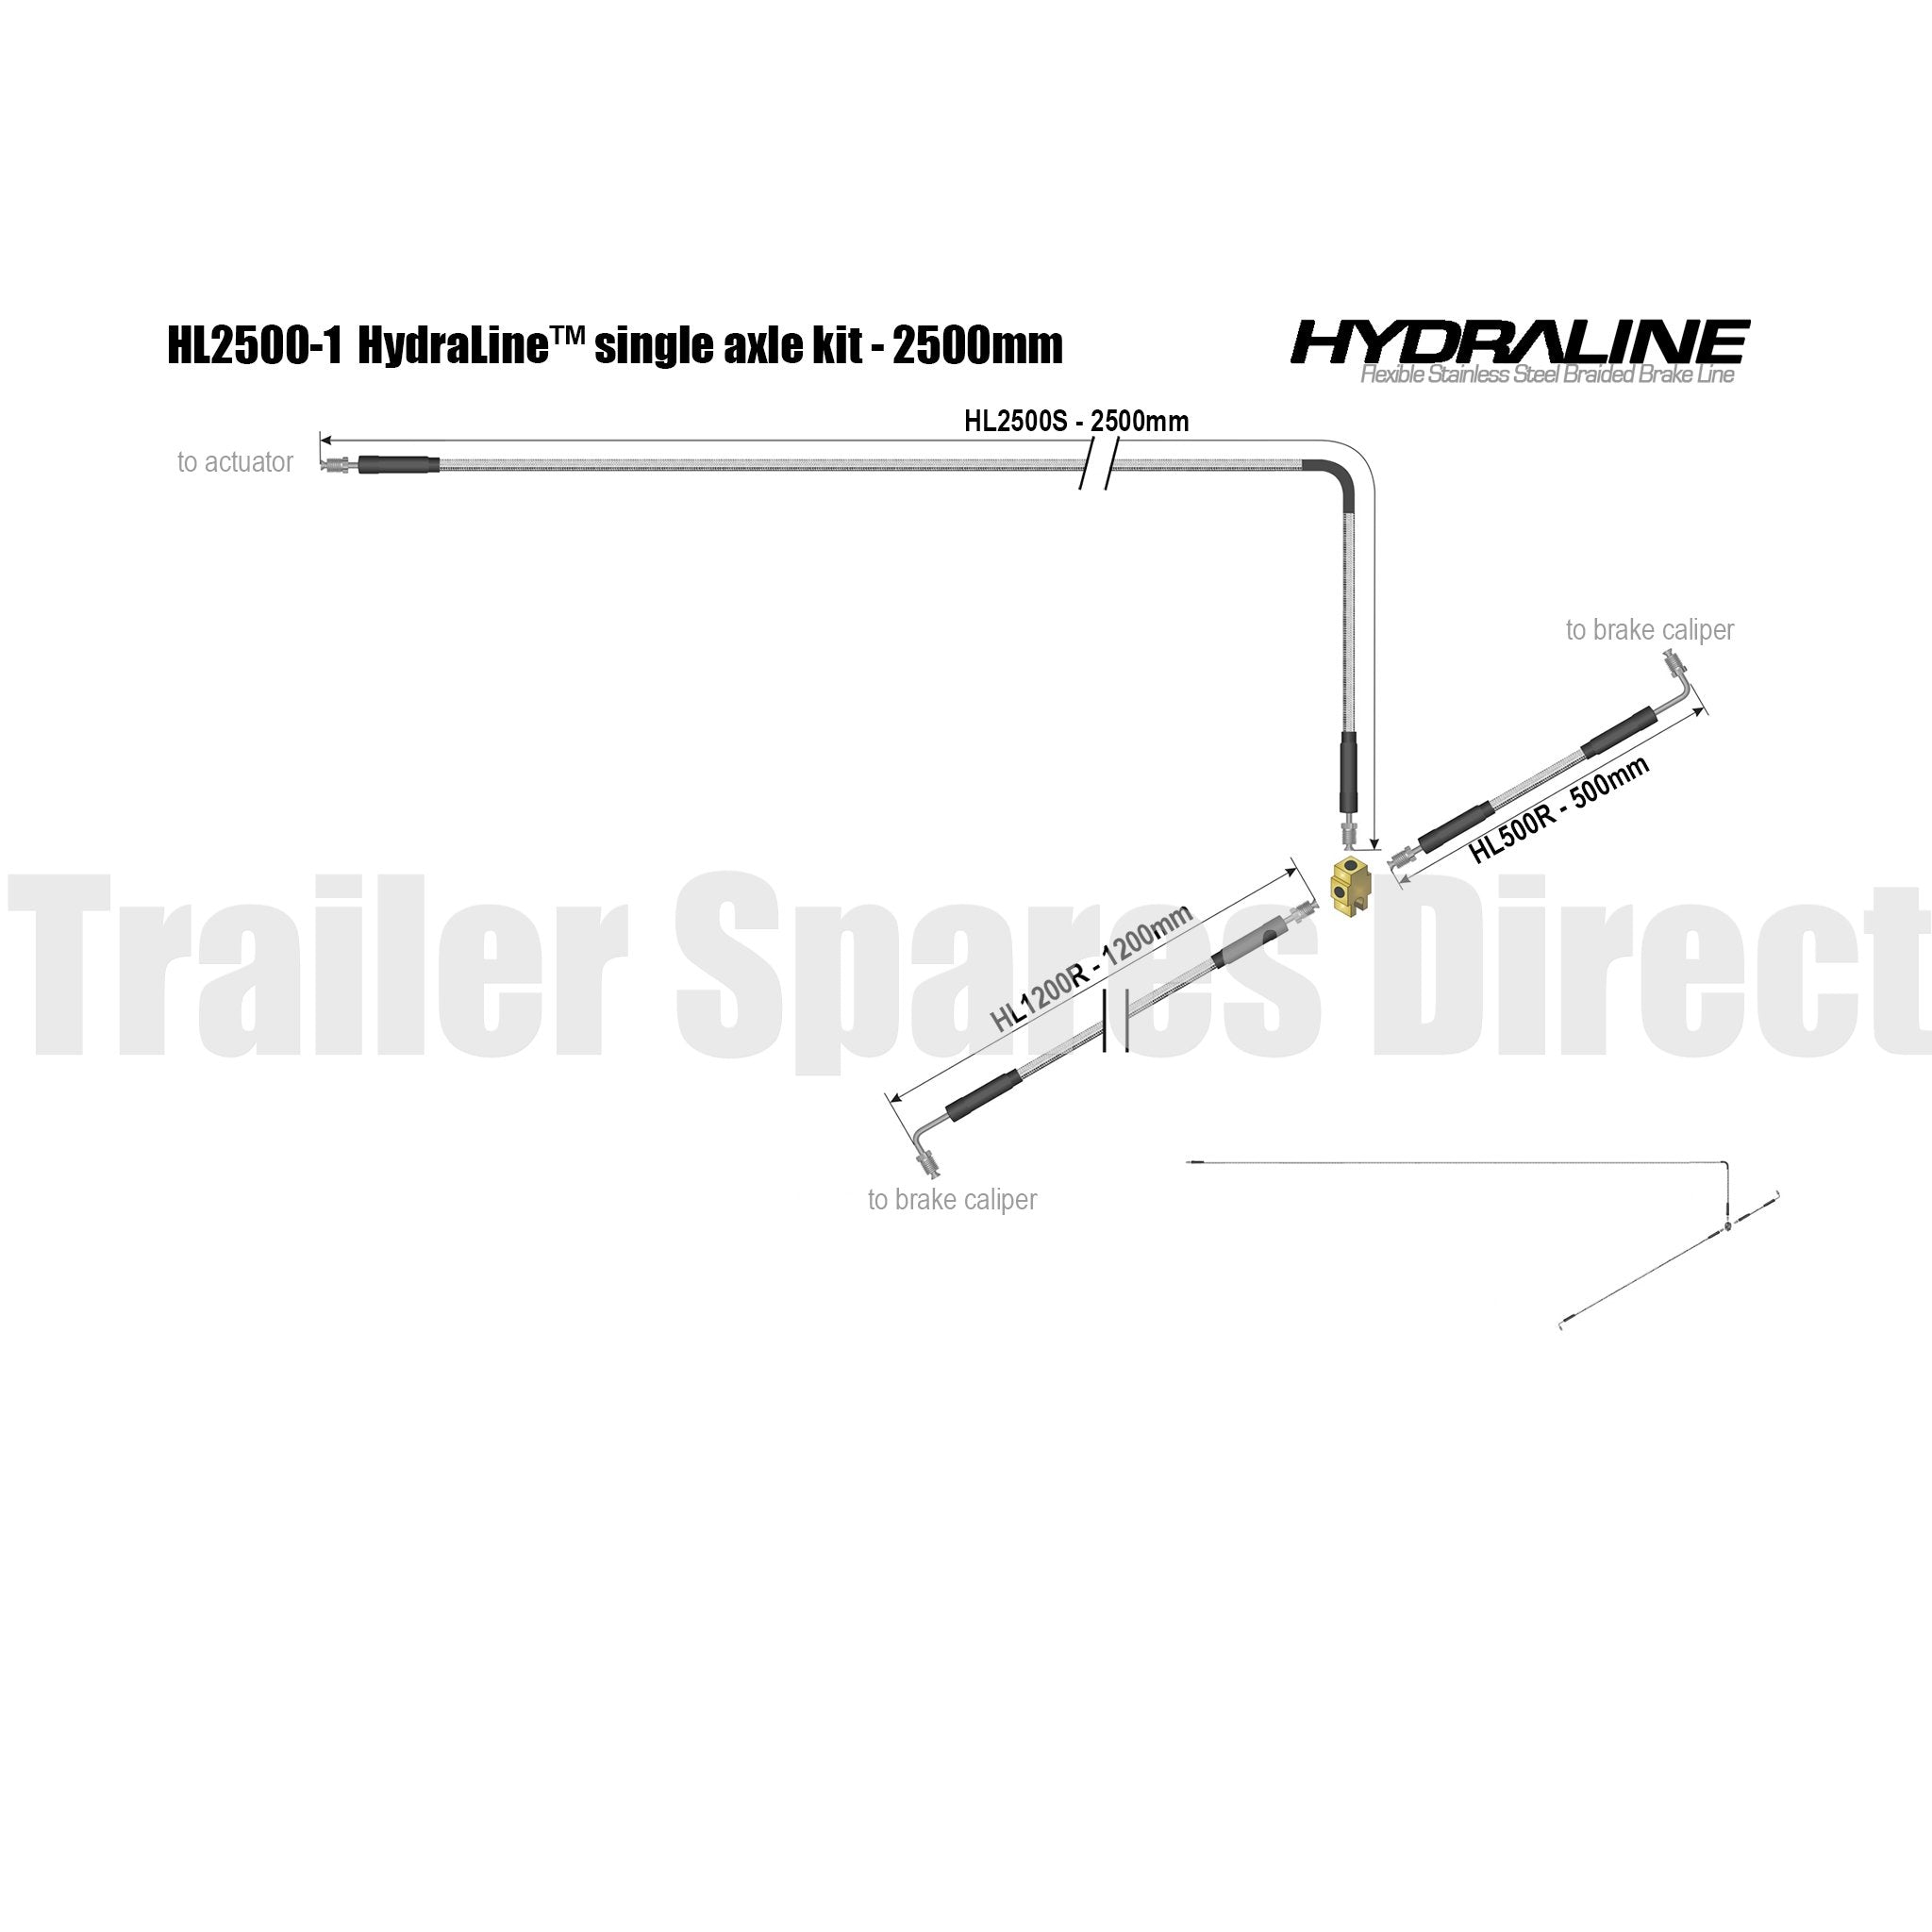 Hydraline kit 2500mm single axle diagram